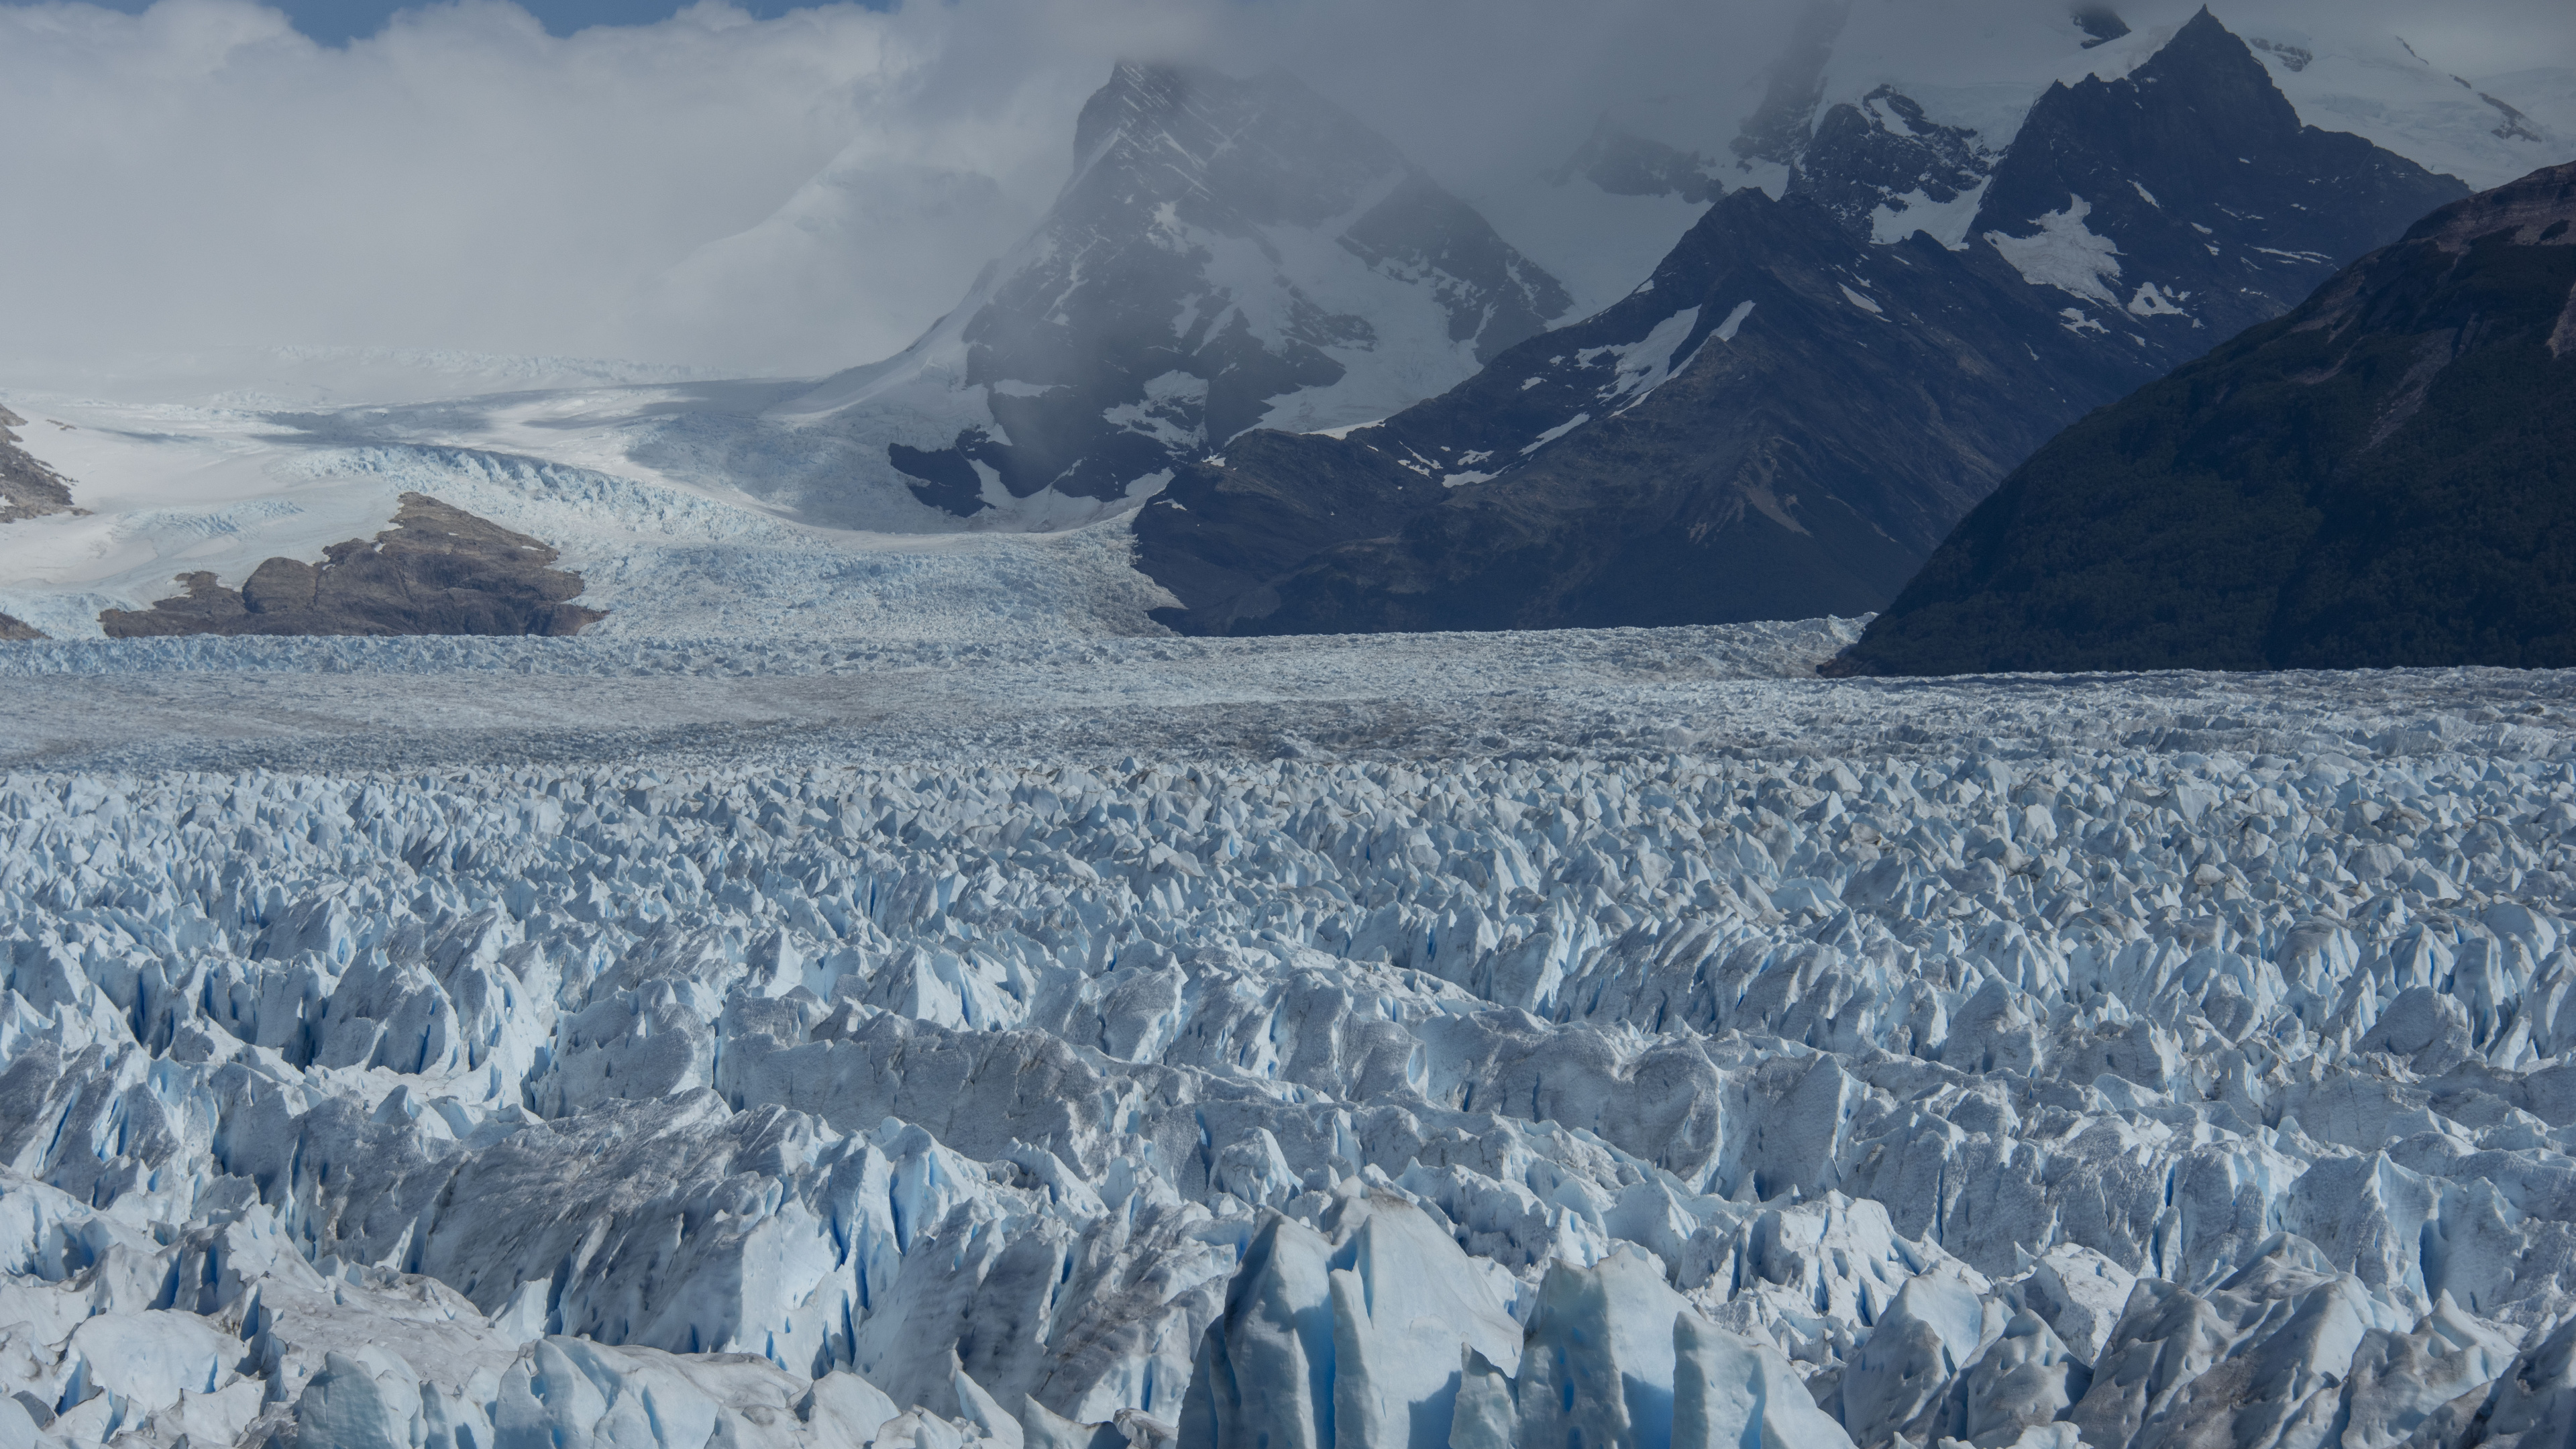 Glacier, Iceberg, Glace, le Lac Glaciaire, Les Reliefs Montagneux. Wallpaper in 3840x2160 Resolution